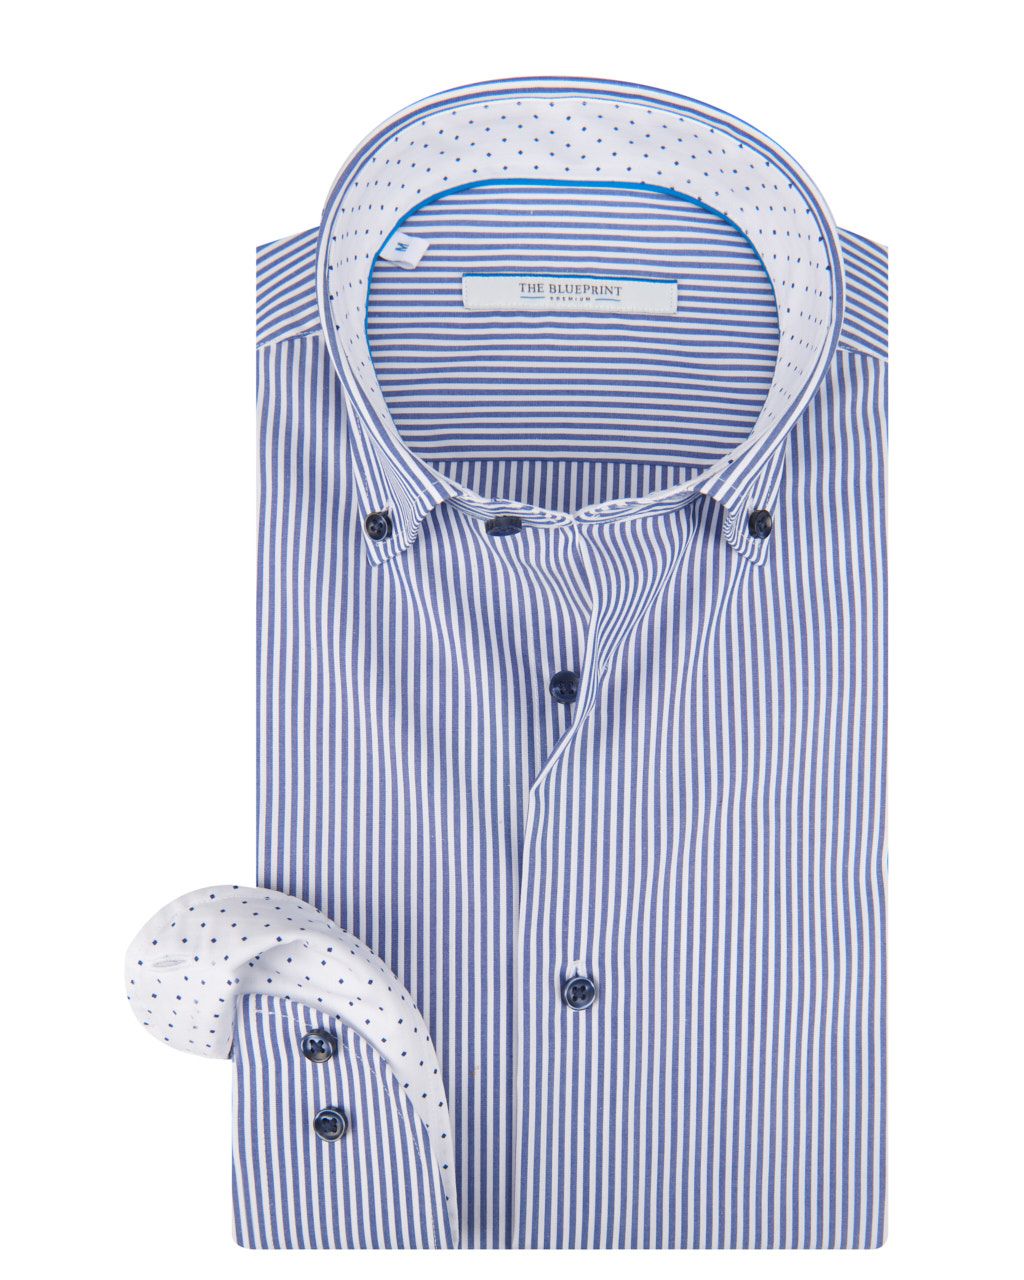 The BLUEPRINT Premium Trendy overhemd LM Blauw streep 061903-001-L